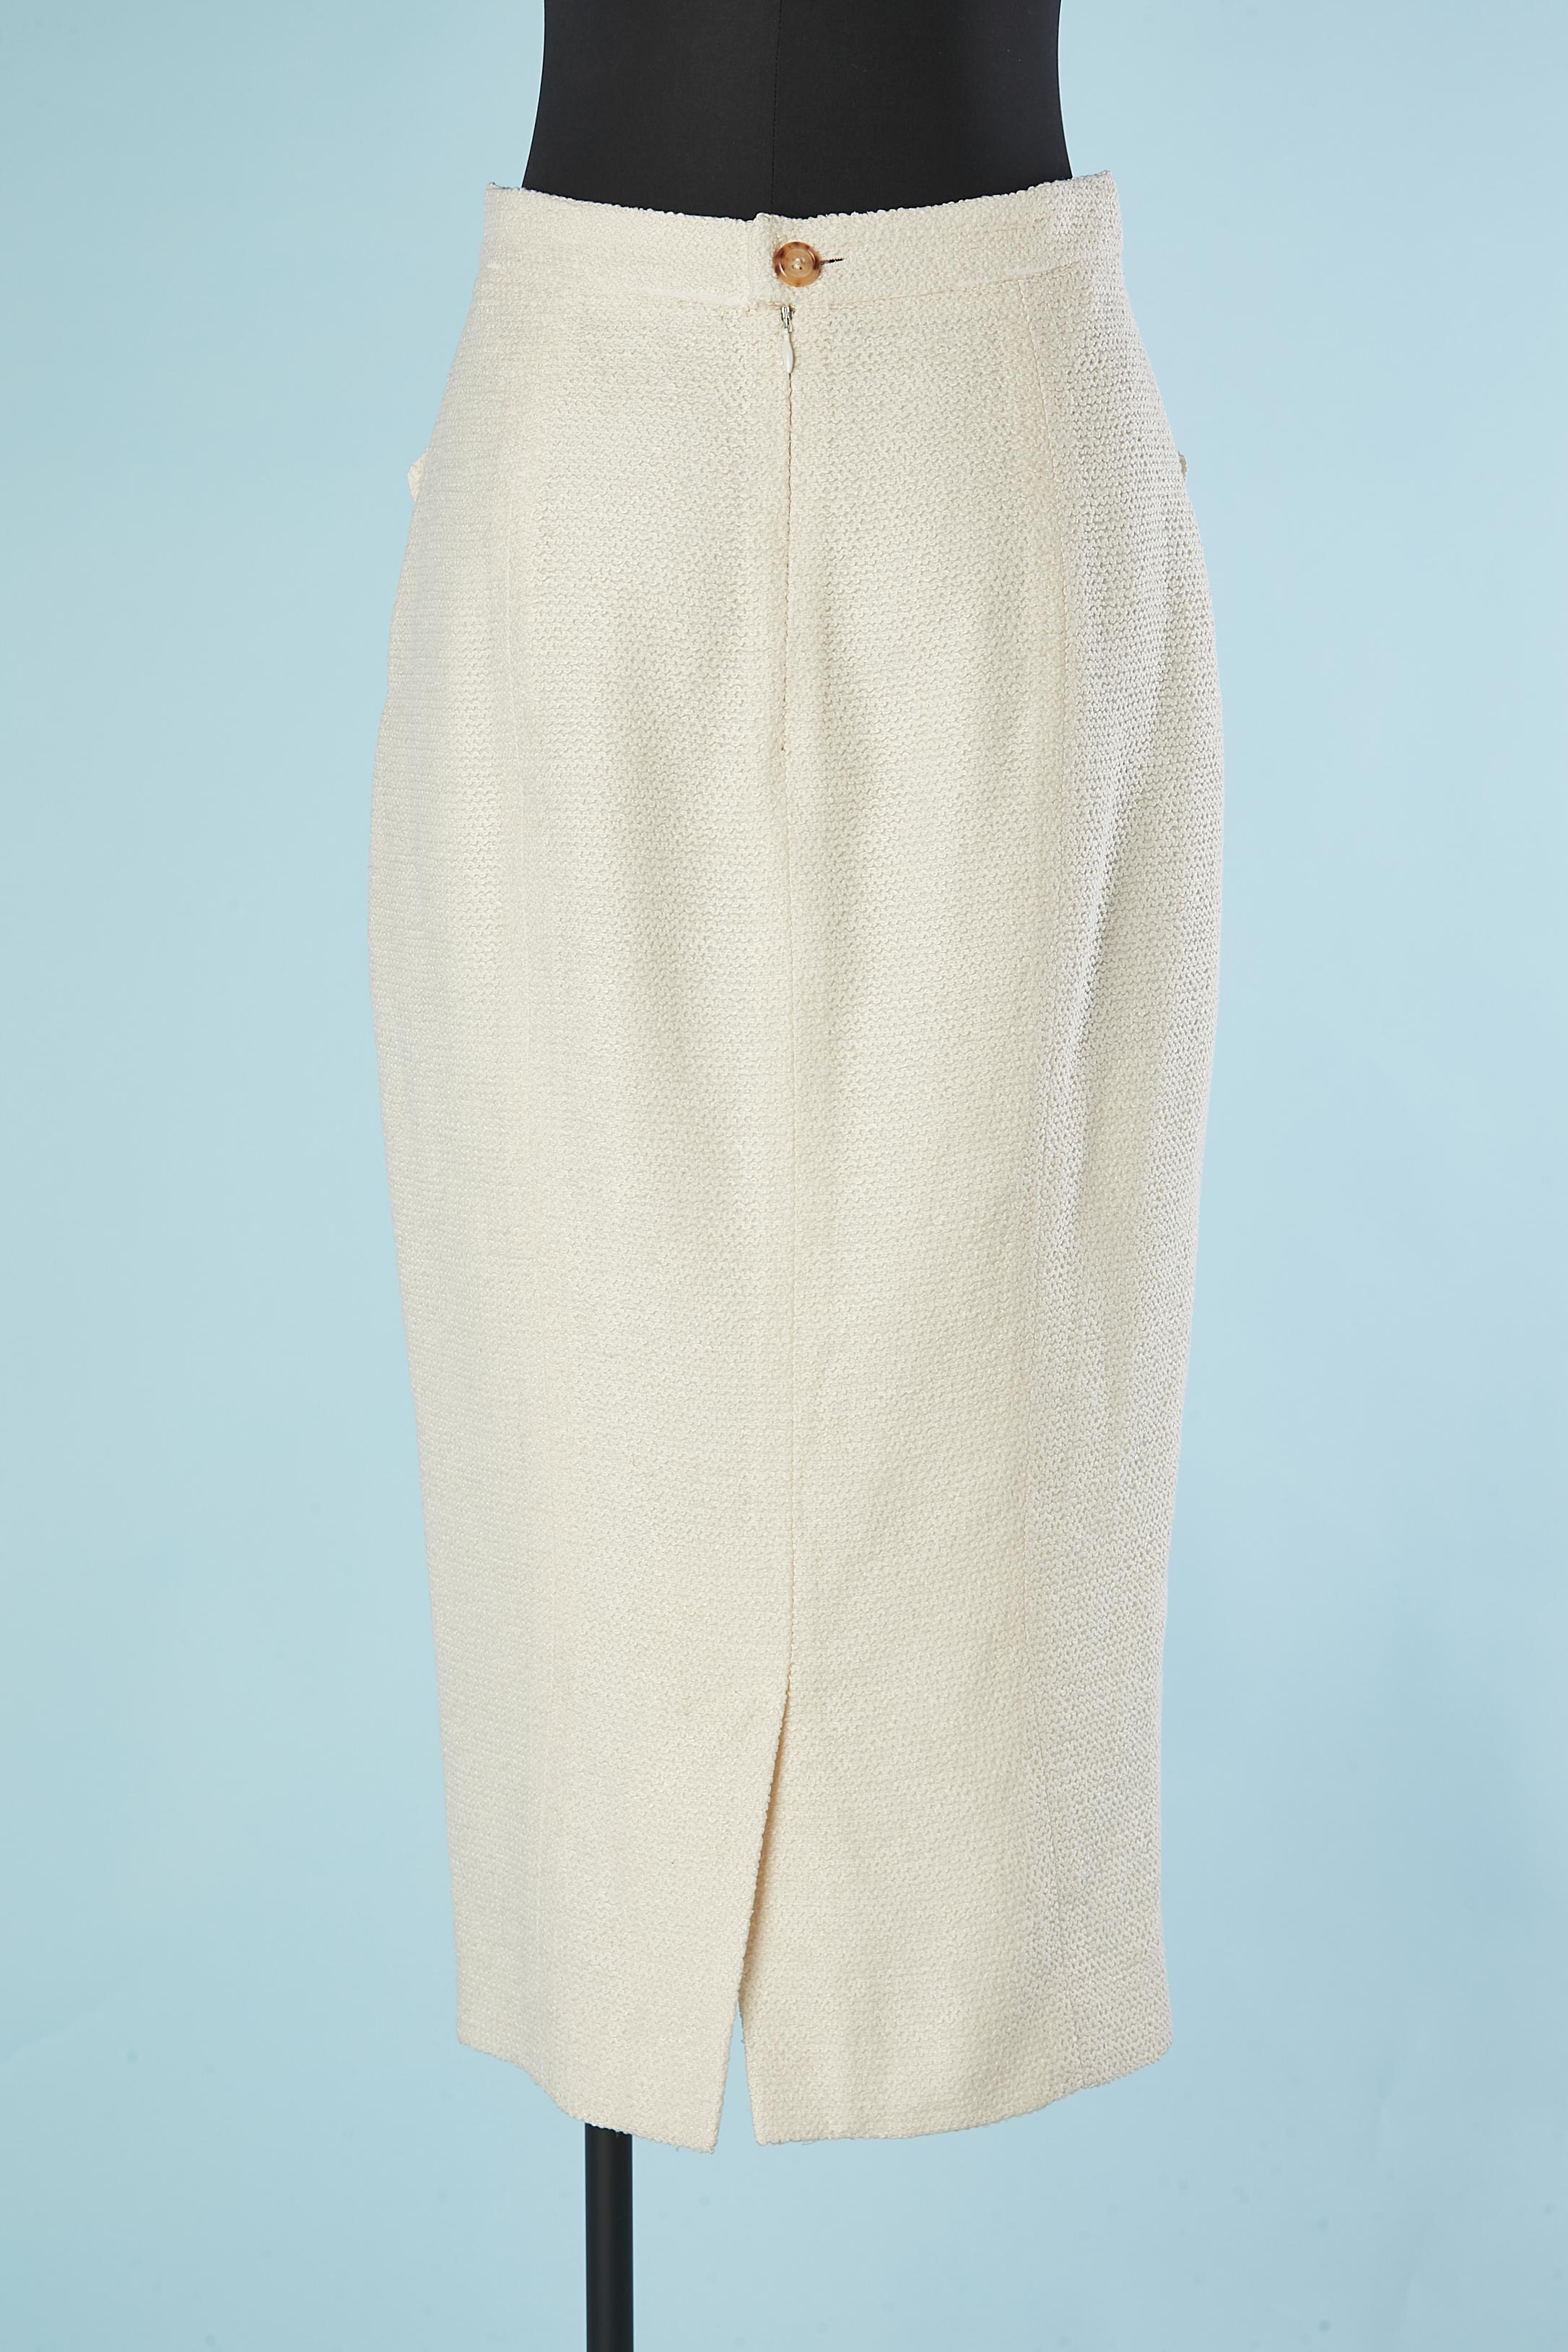 Off-white silk and cotton pencil skirt Yves Saint Laurent Rive Gauche  In Excellent Condition For Sale In Saint-Ouen-Sur-Seine, FR